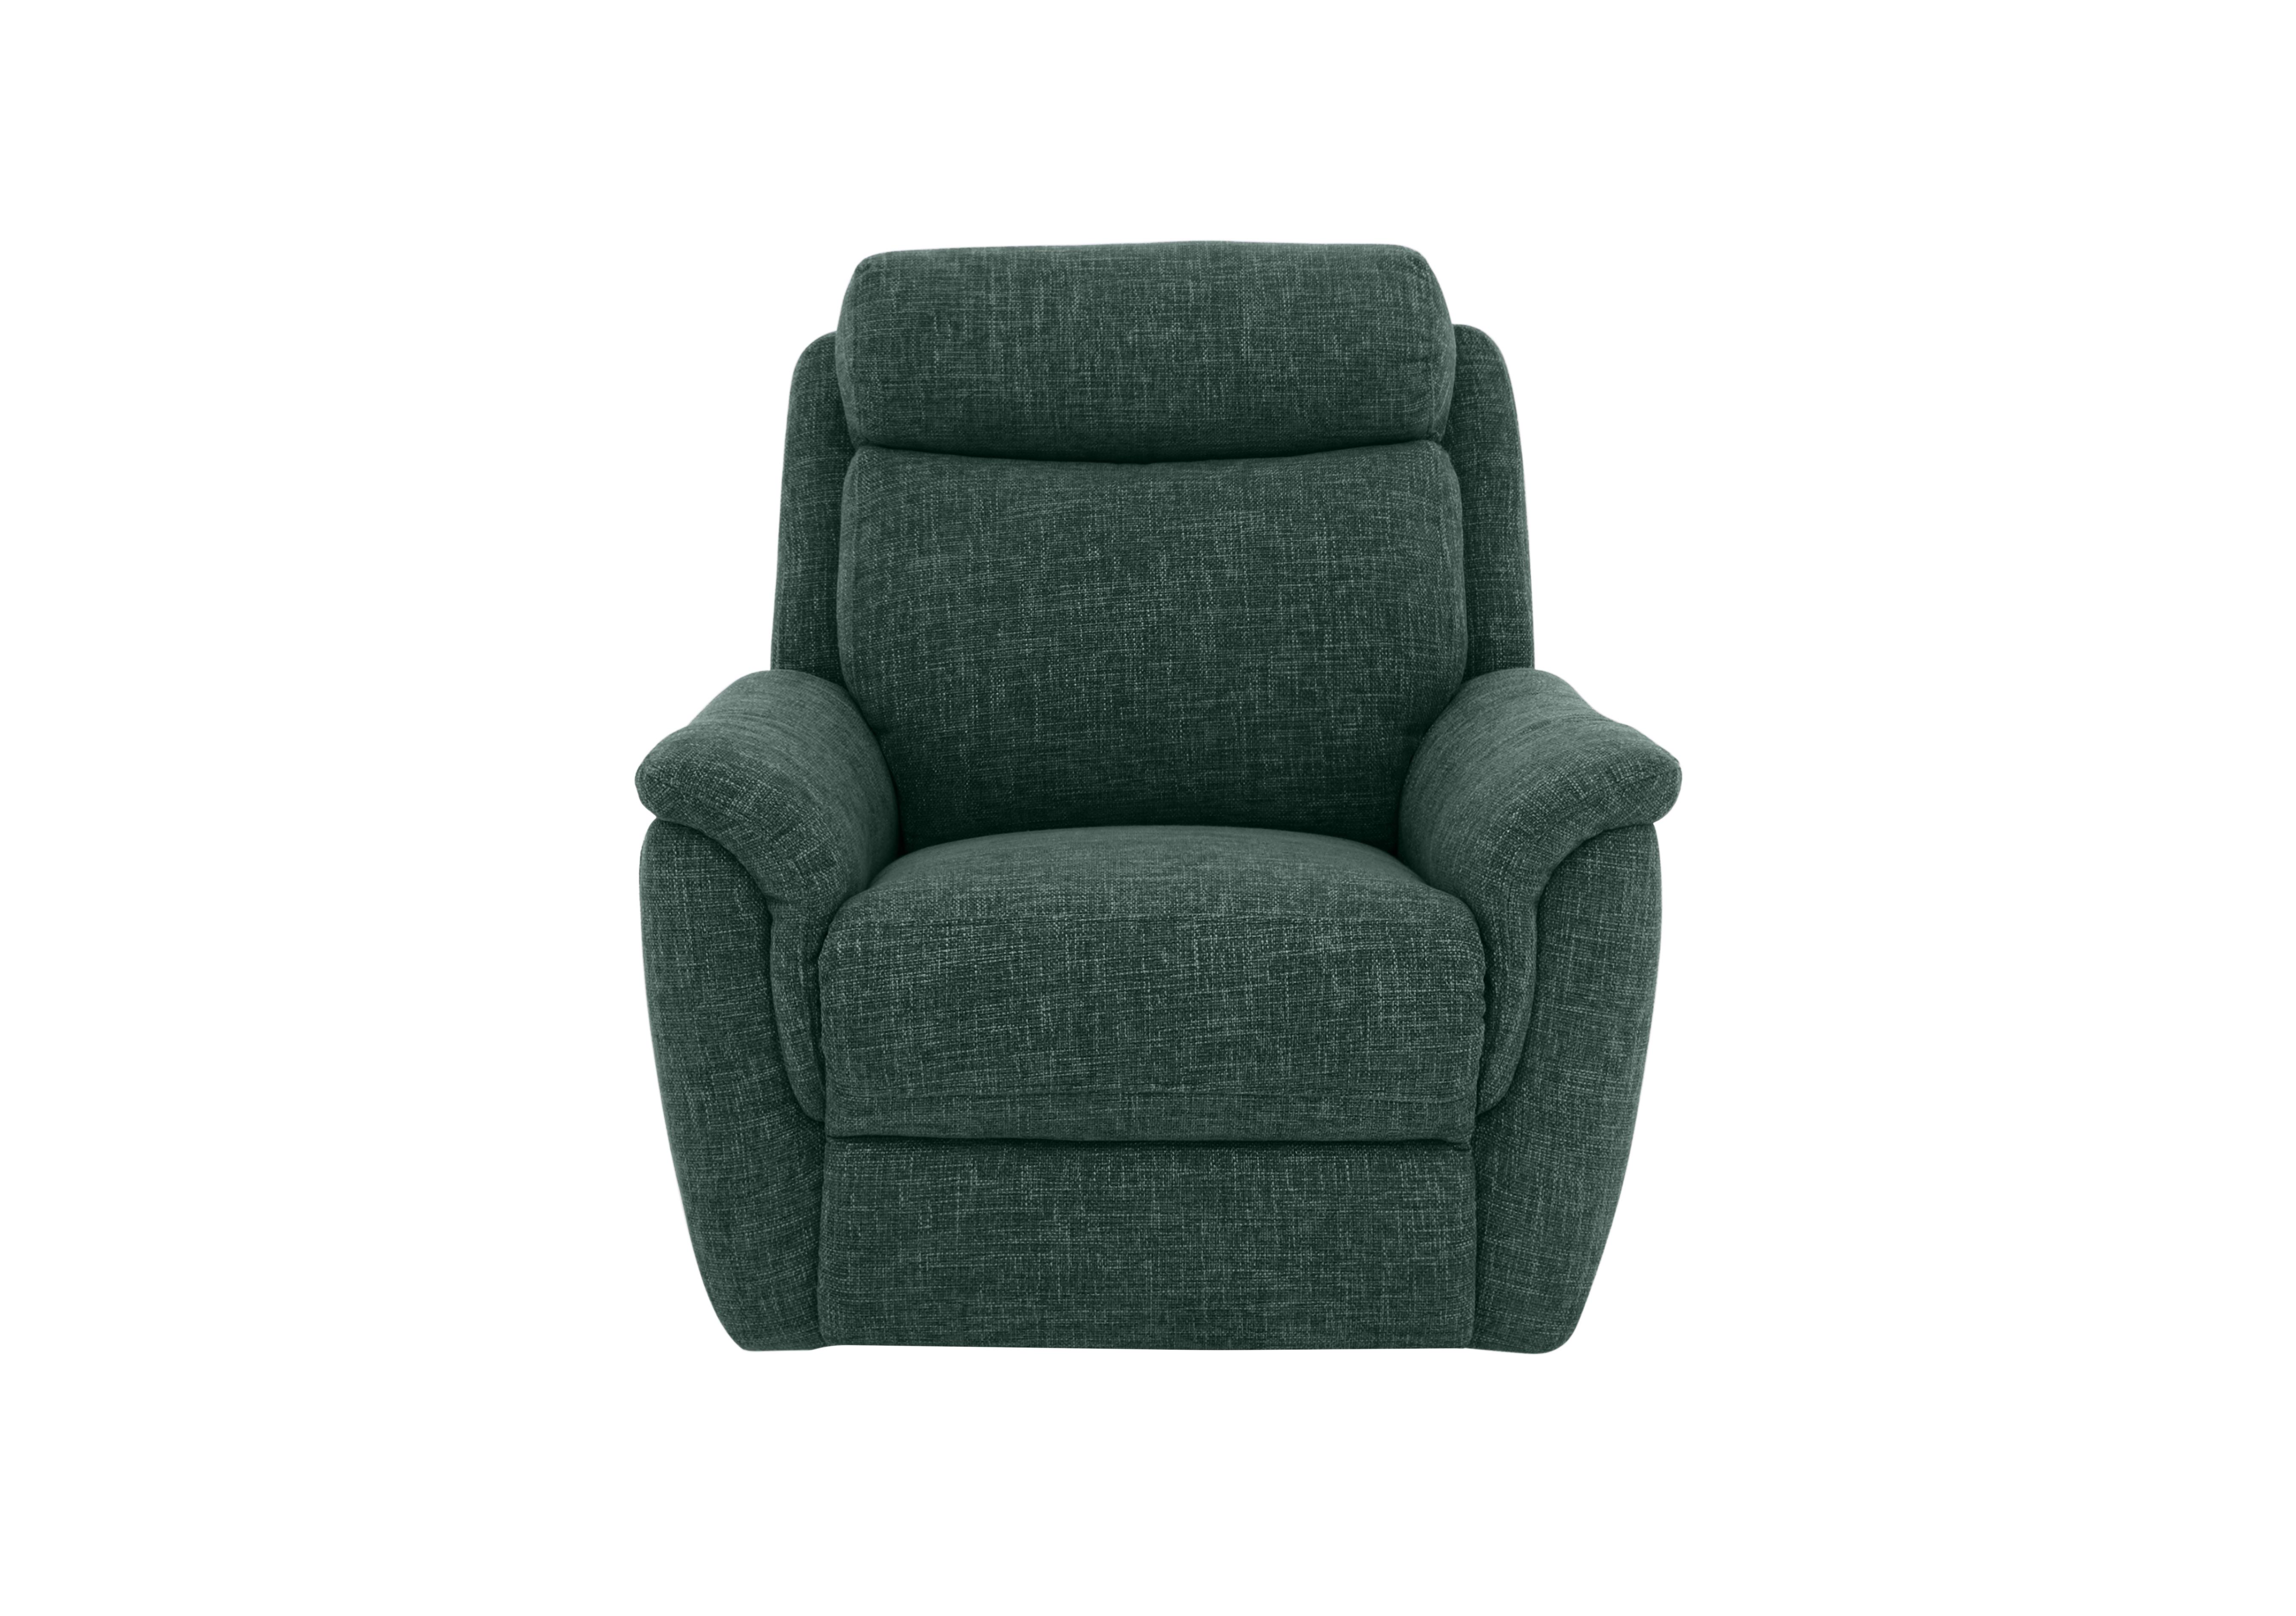 Orlando Fabric Chair in Anivia Green 19445 on Furniture Village